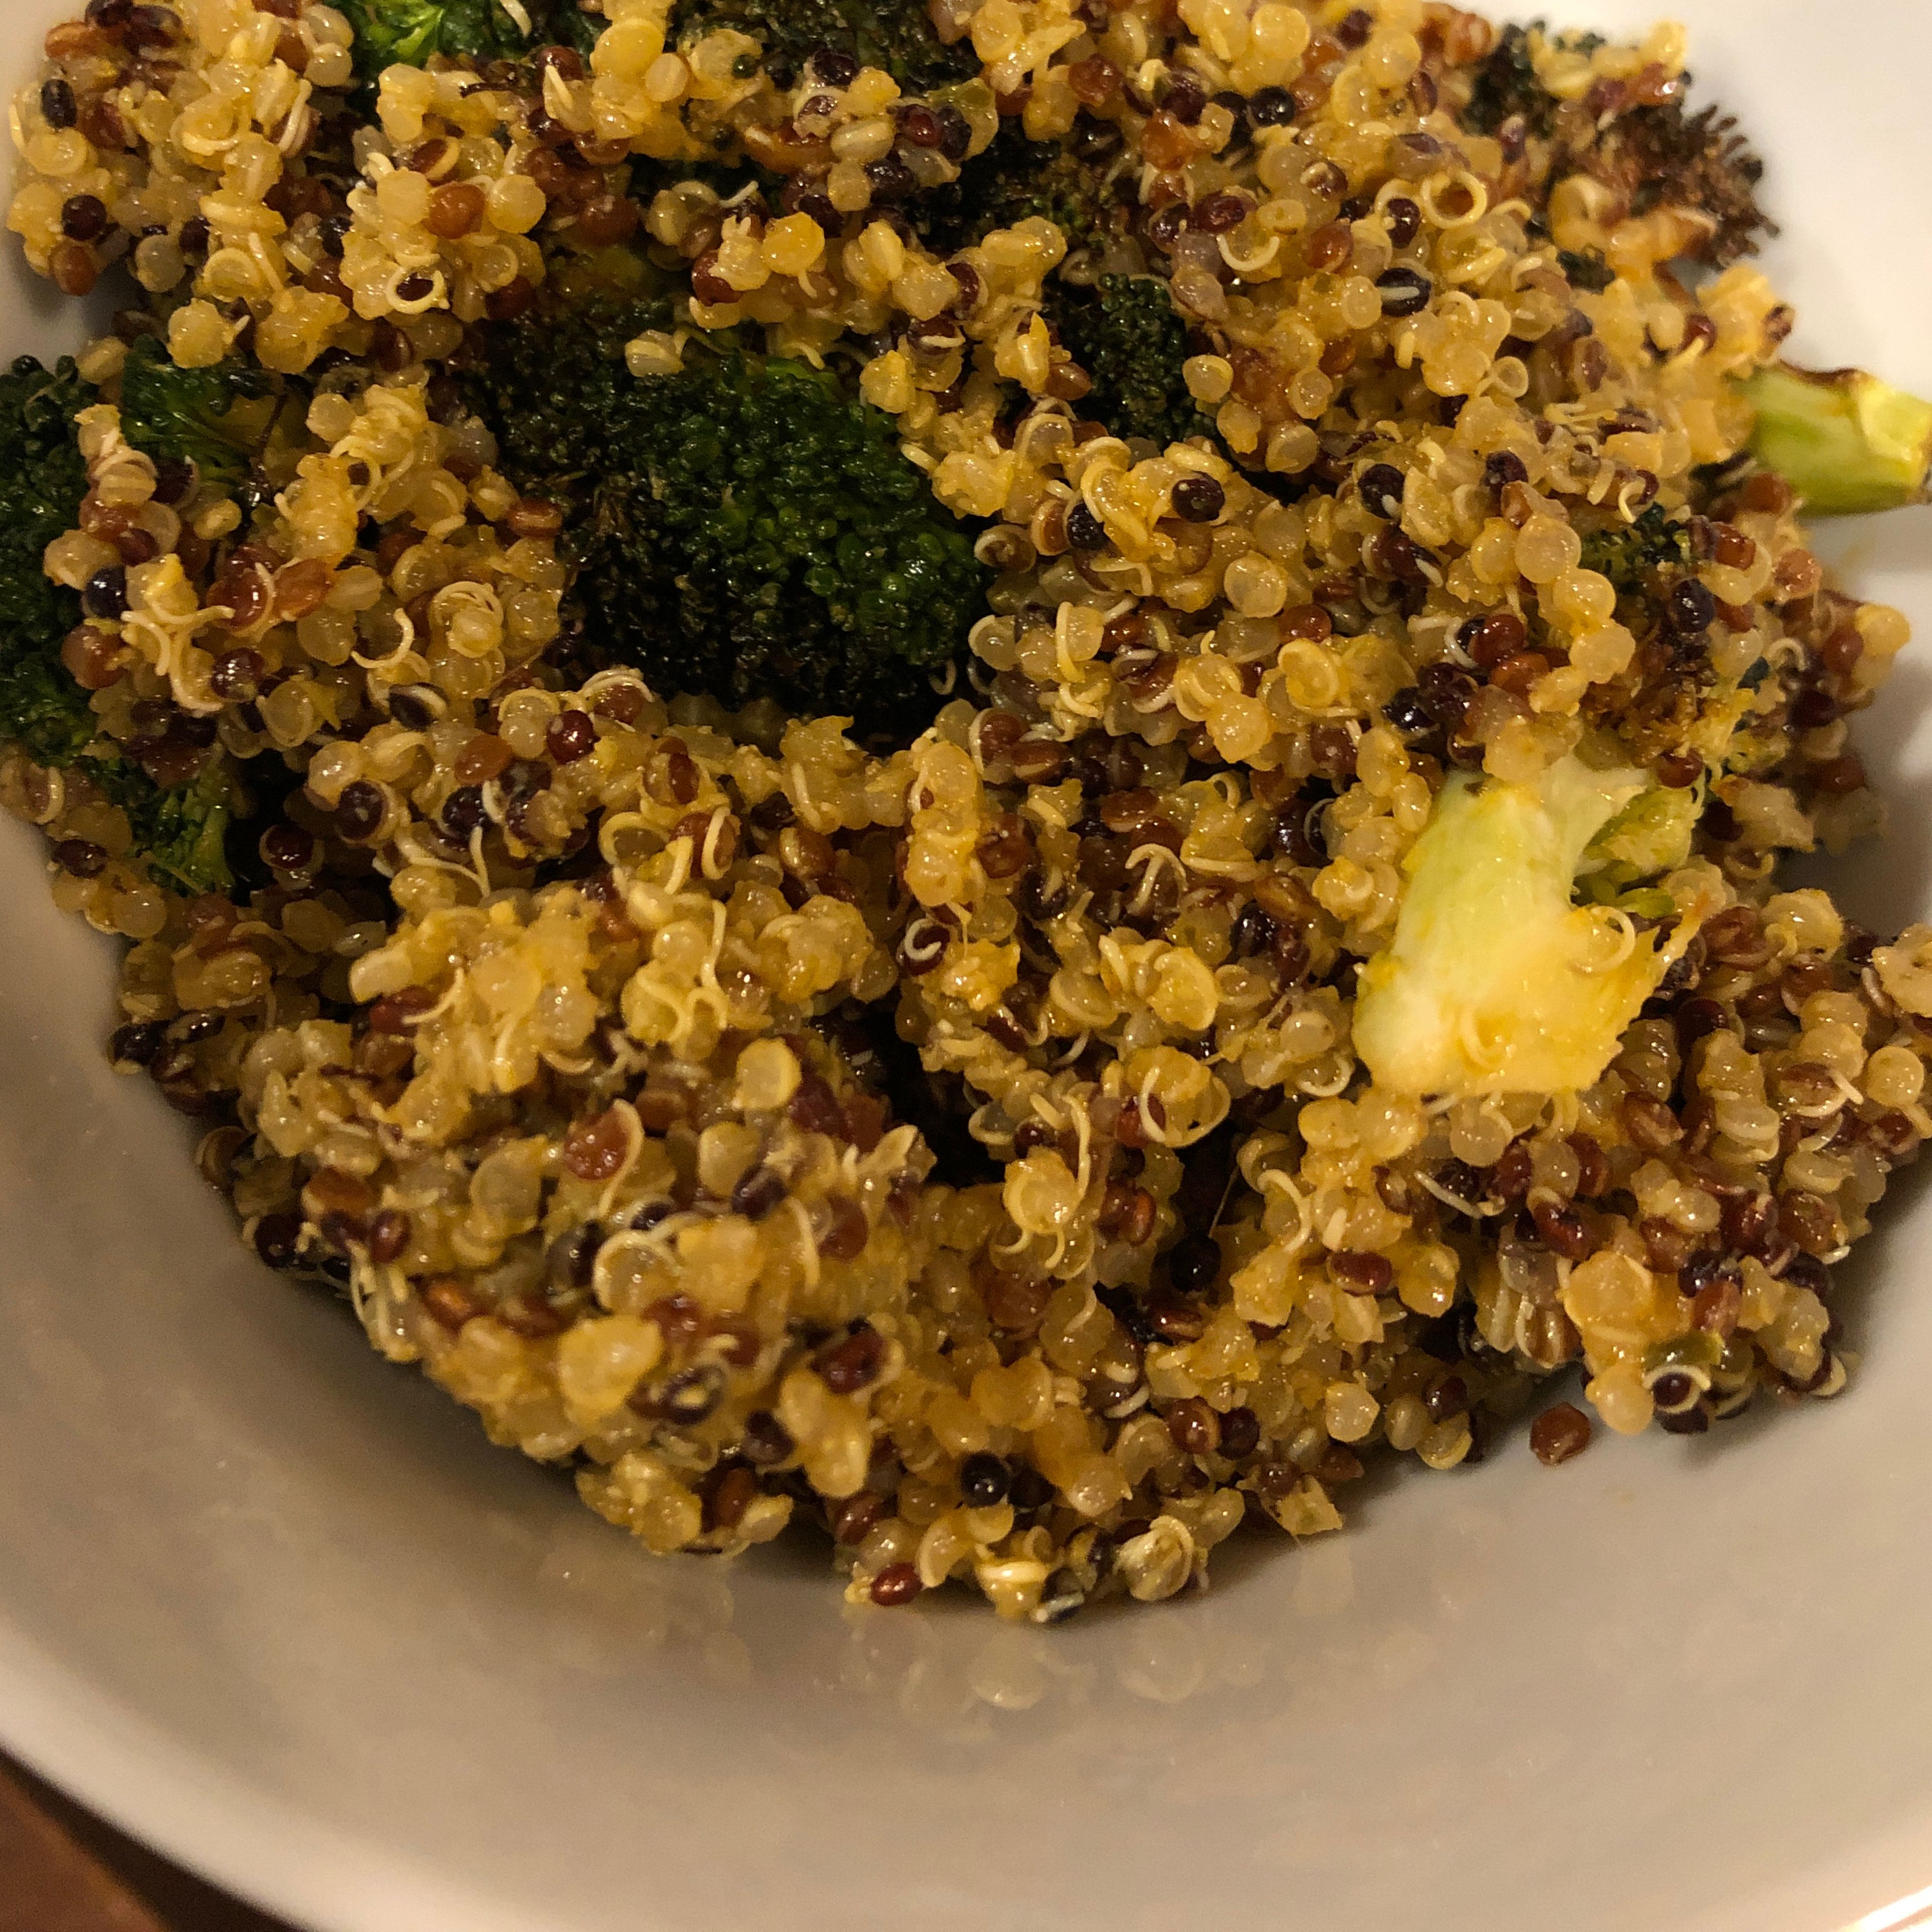 Sweetgreen inspired quinoa bowl